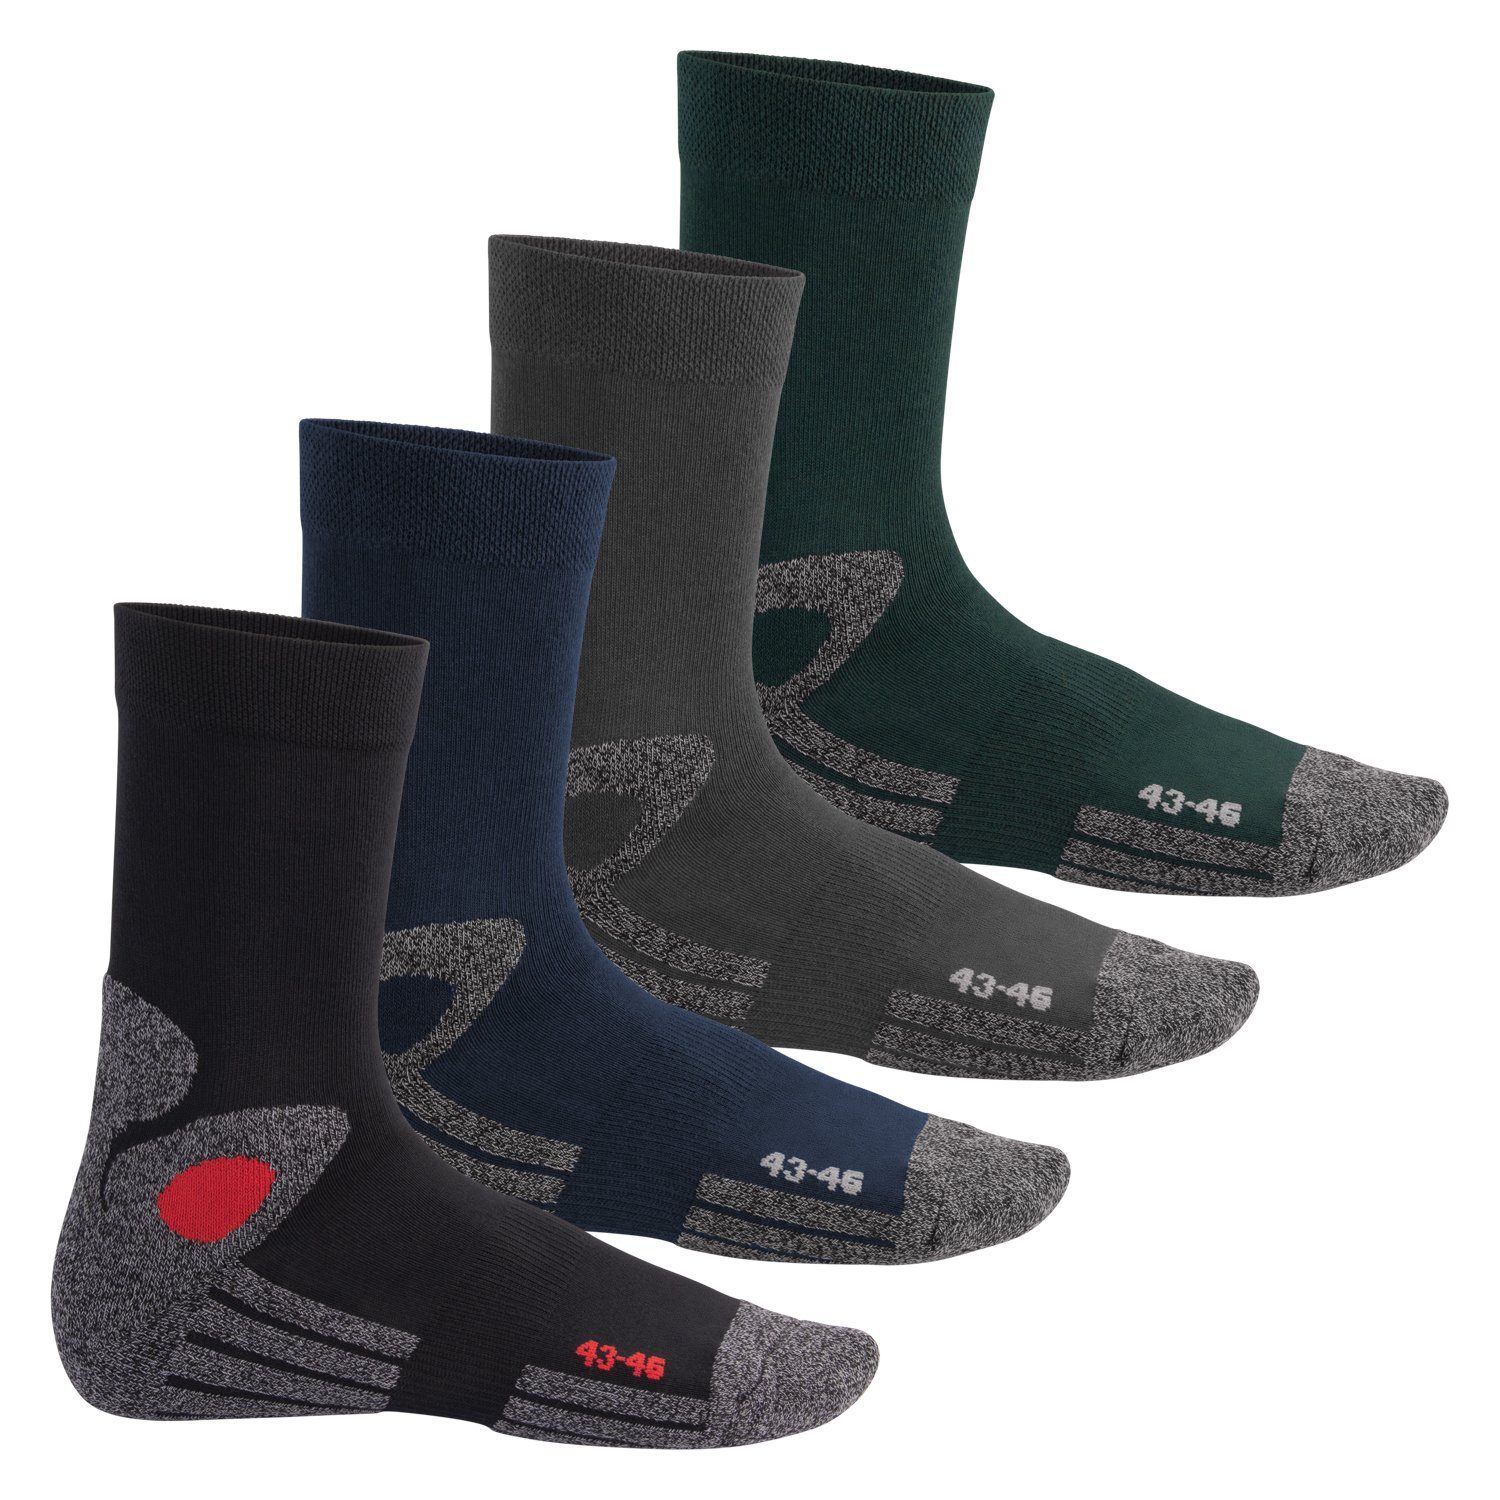 All Trekking-Socken Herren (4 celodoro Frotteesohle Paar) Arbeitssocken Colours & mit für Damen